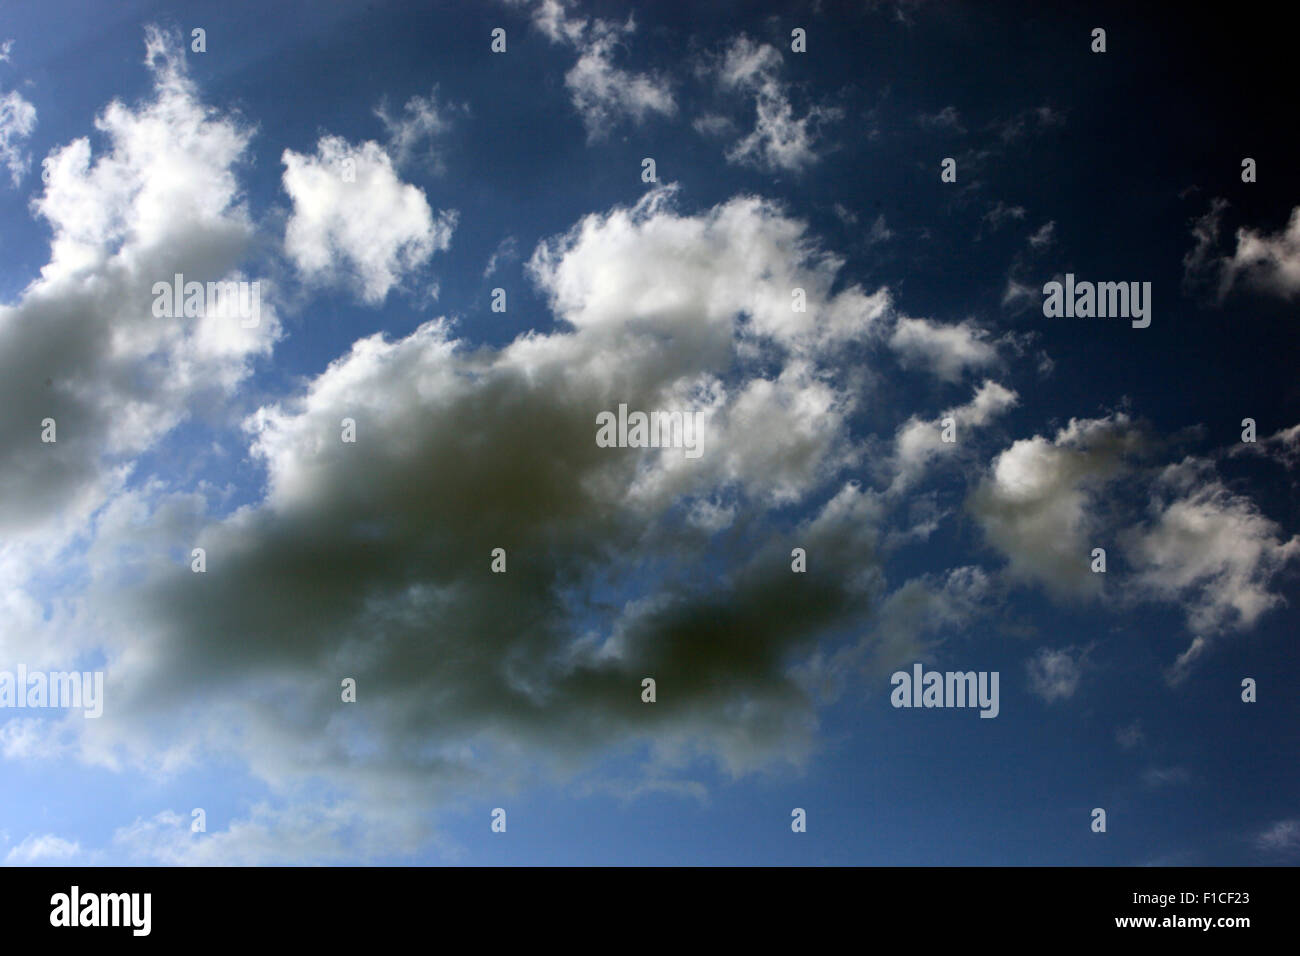 rain clouds in the sky Stock Photo